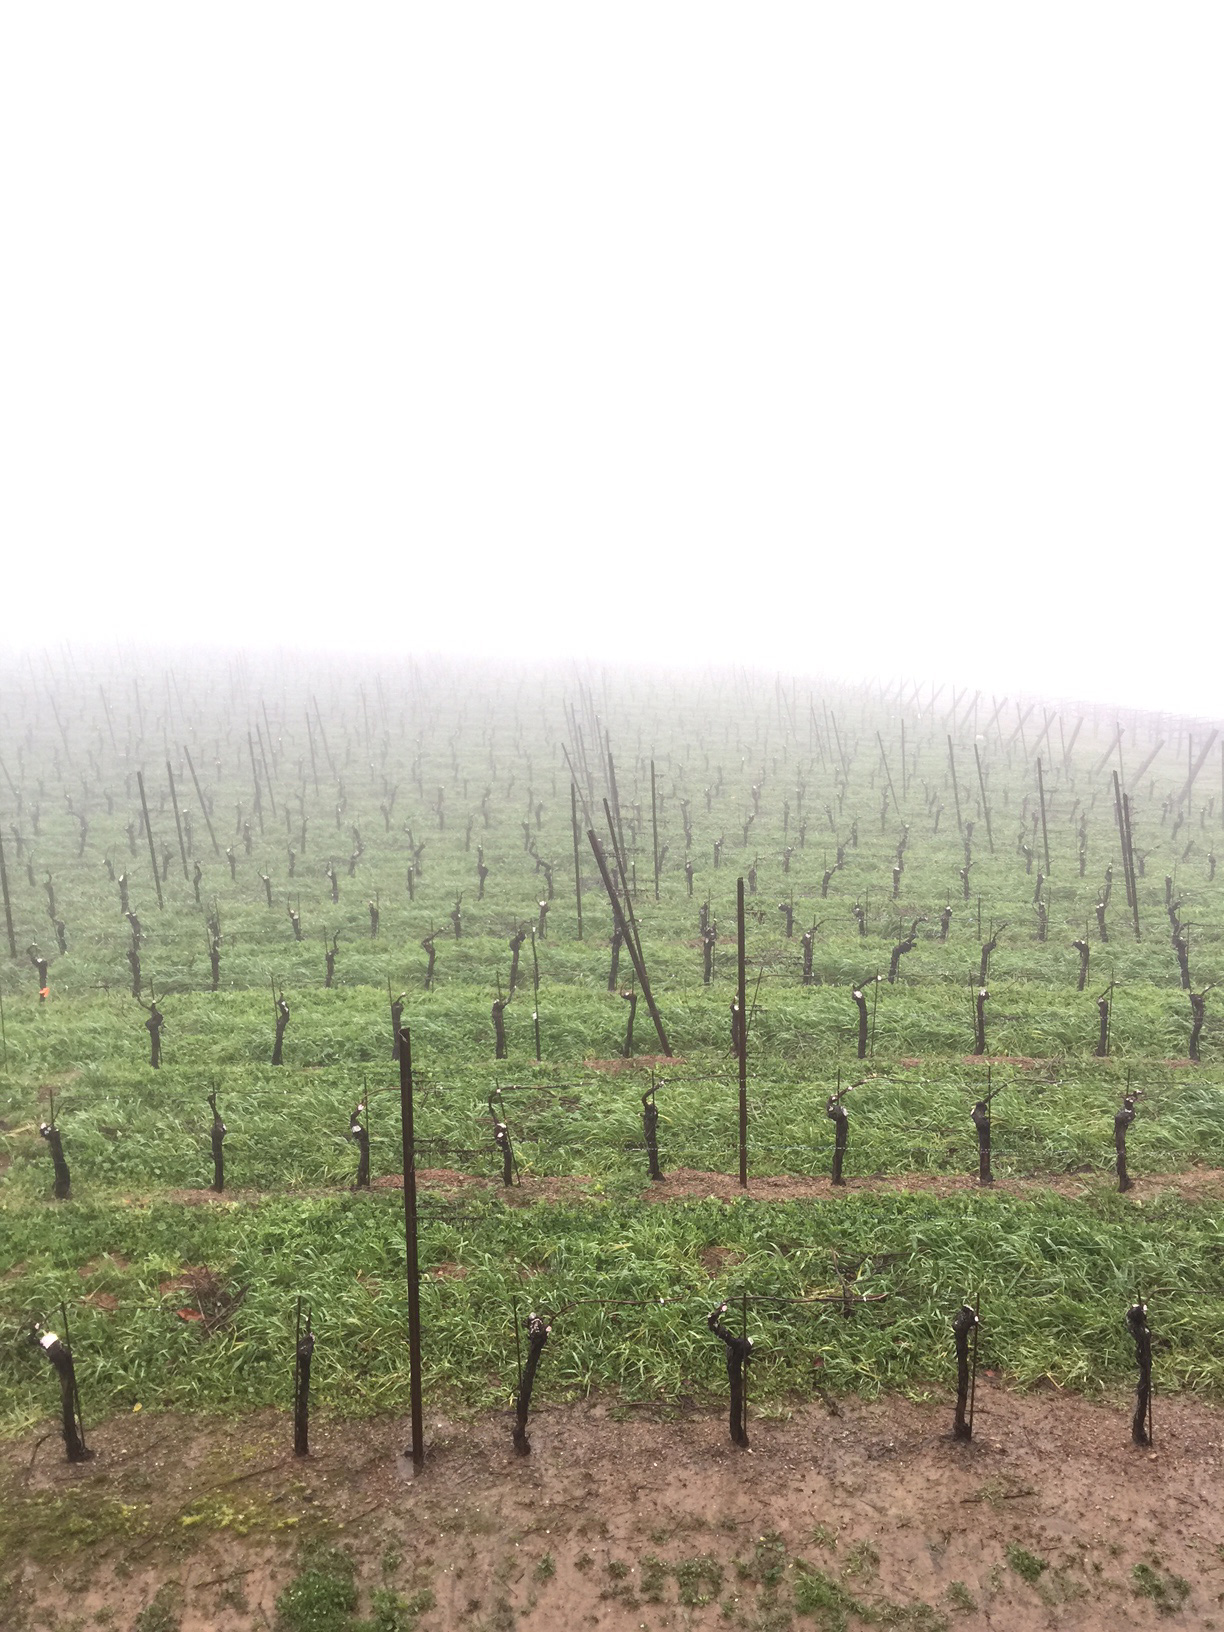 Vines at Mount Eden beautifully masked in fog